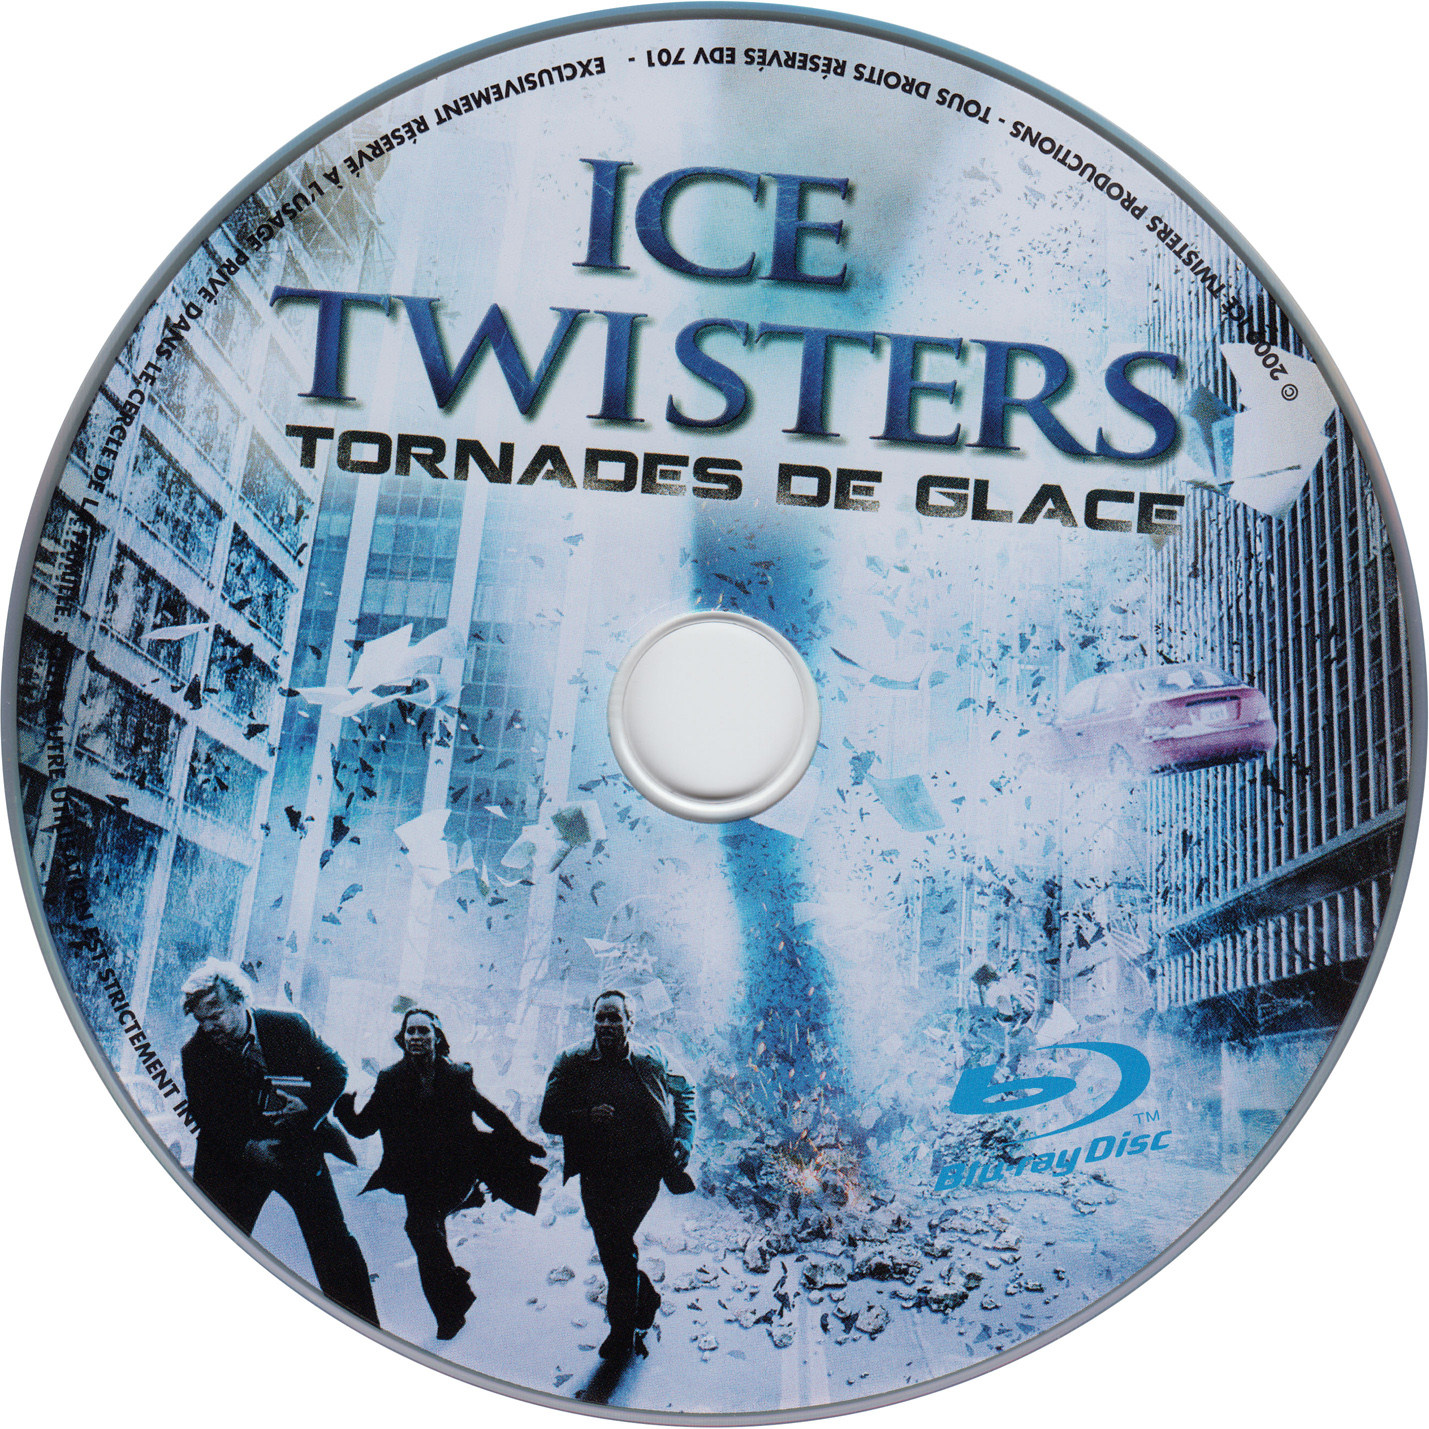 Ice twisters tornades de glace (BLU-RAY)